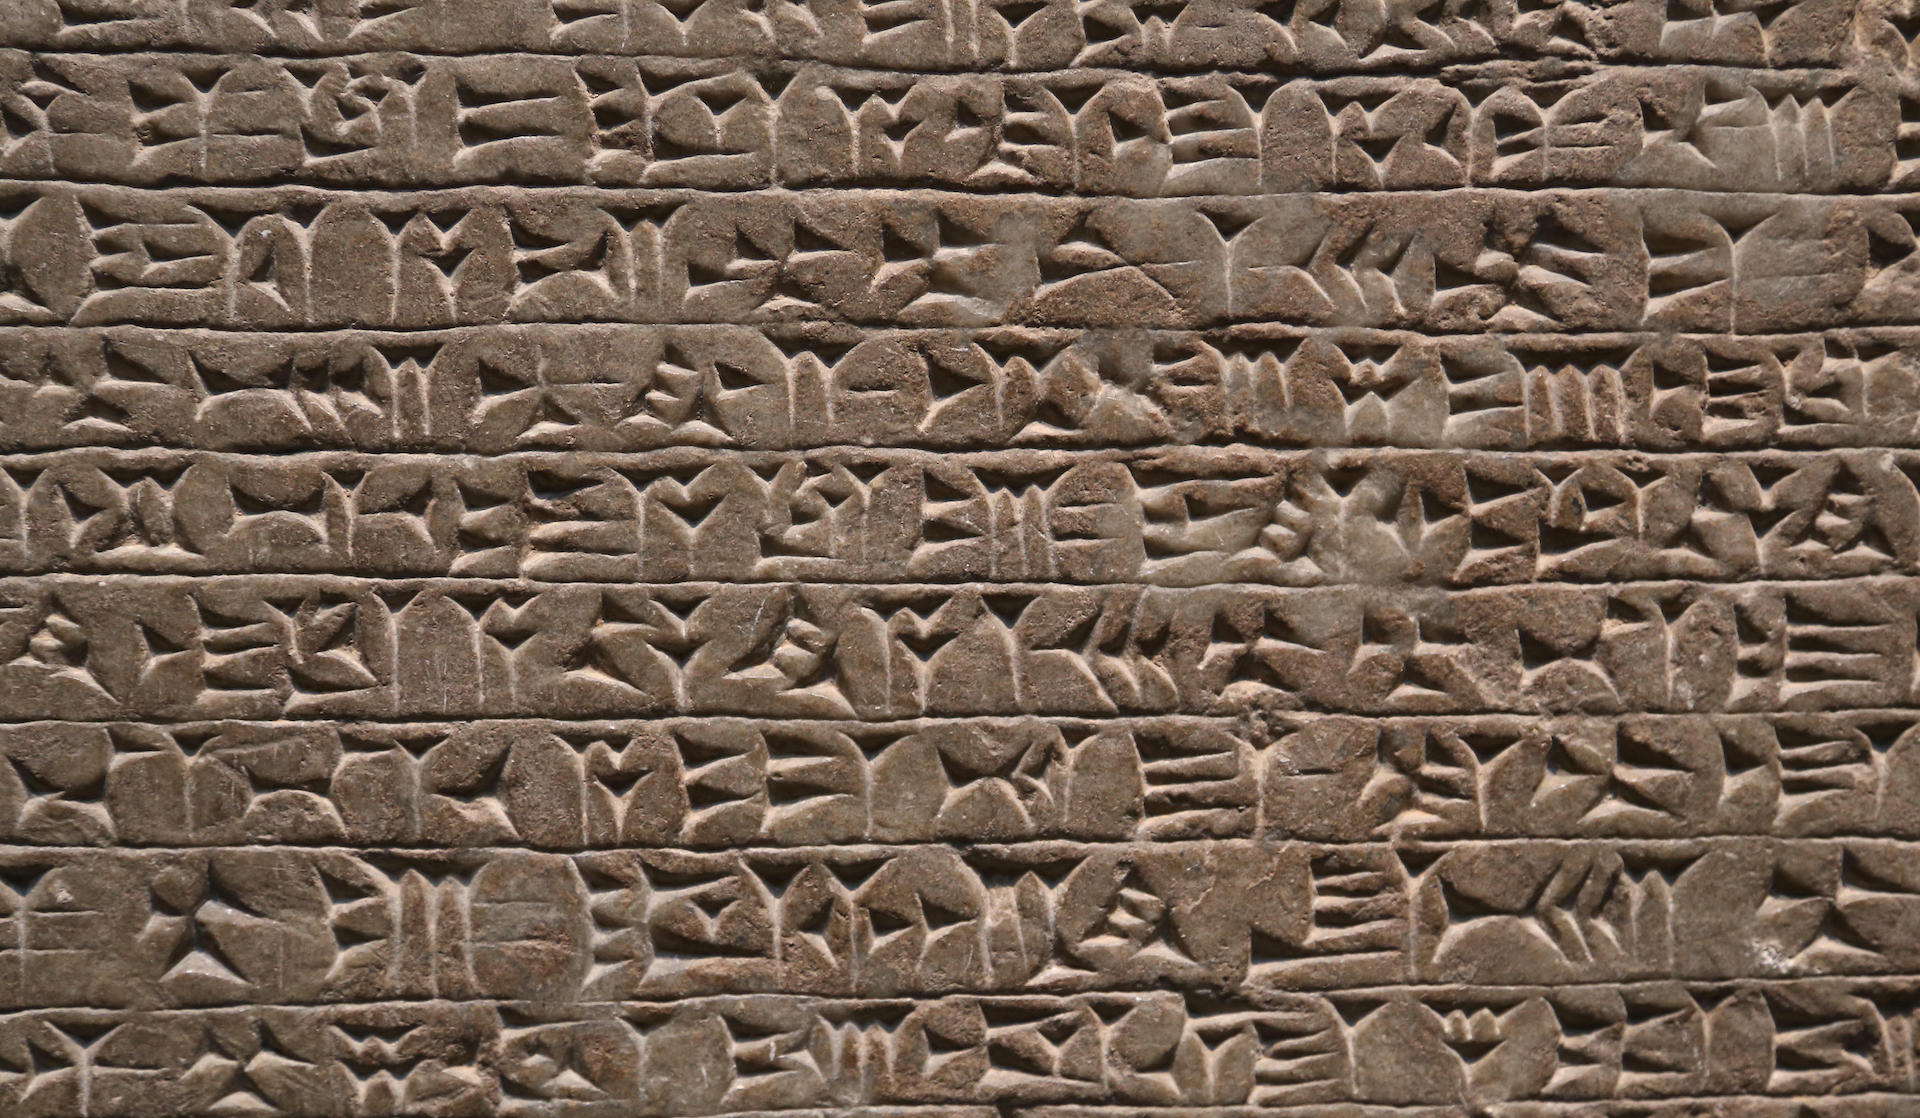 ancient mesopotamian writing